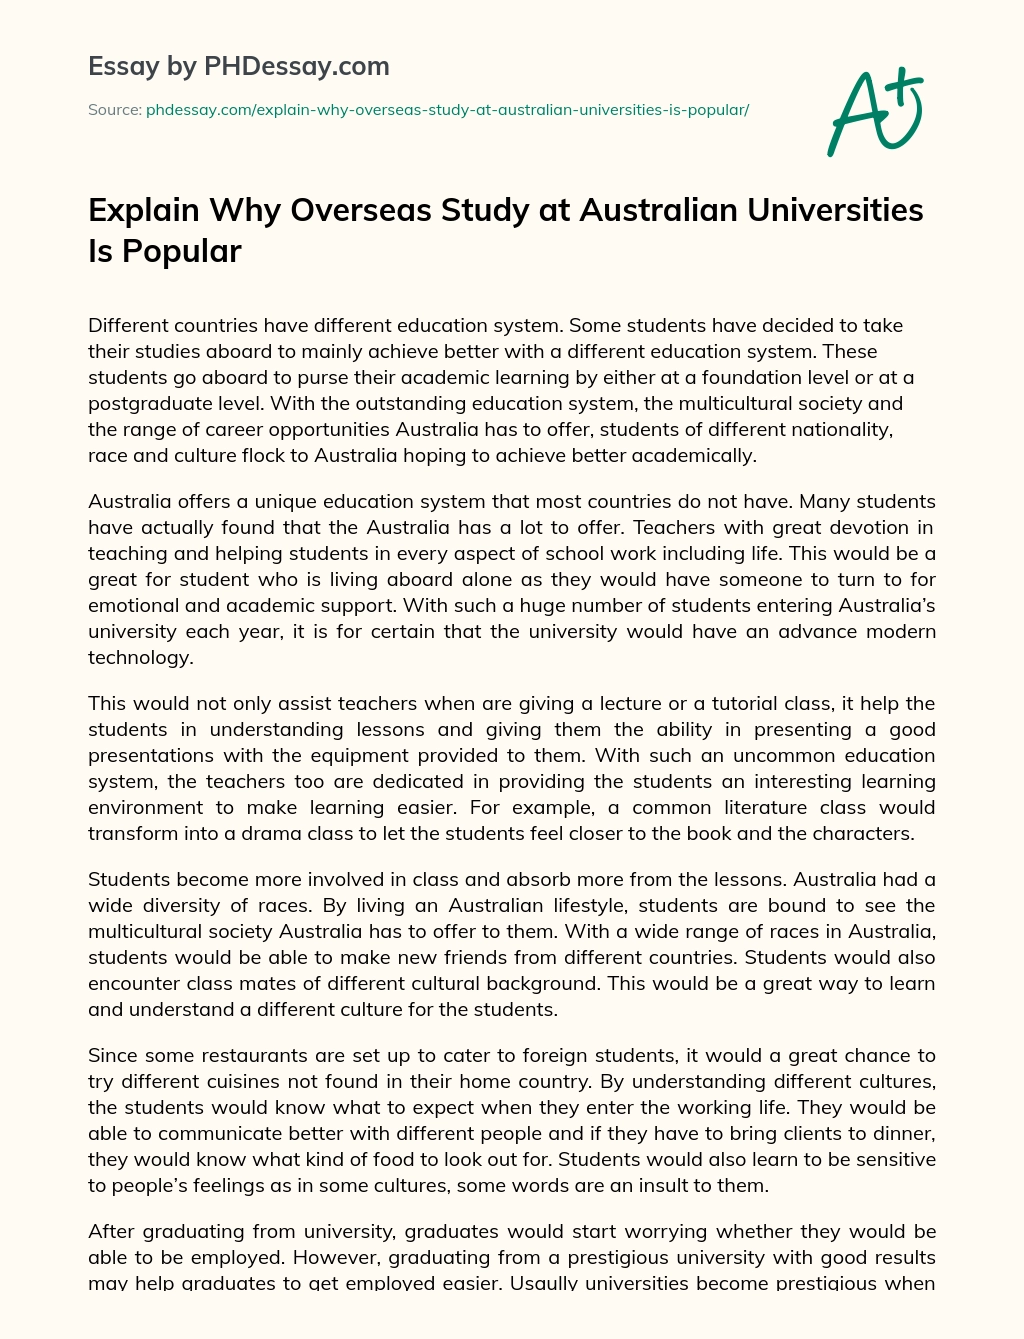 Explain Why Overseas Study at Australian Universities Is Popular essay